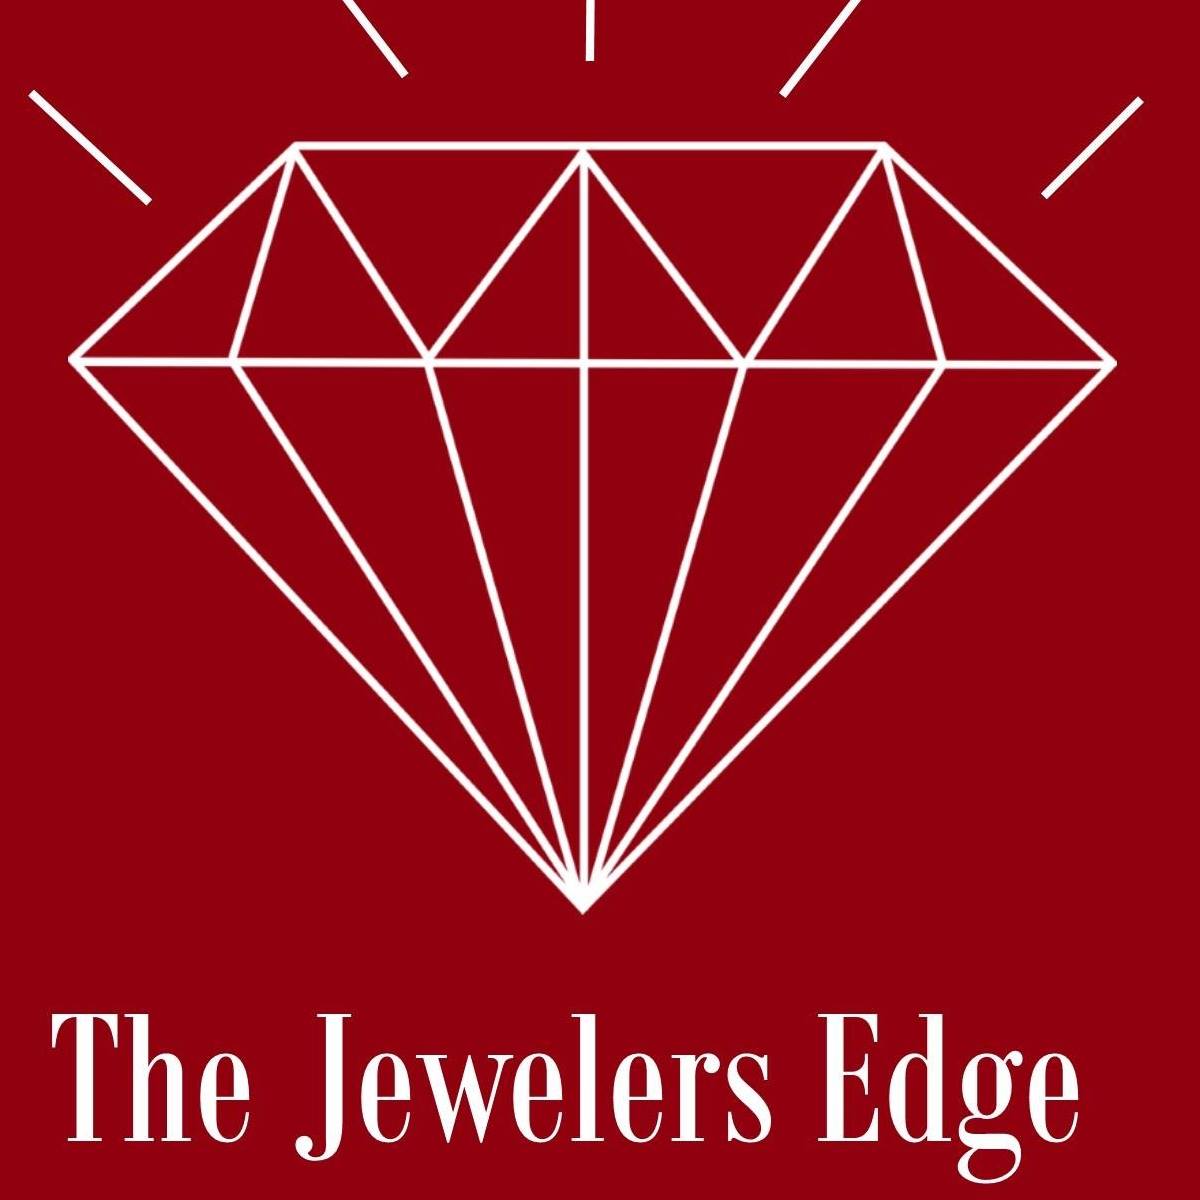 The Jeweler's Edge